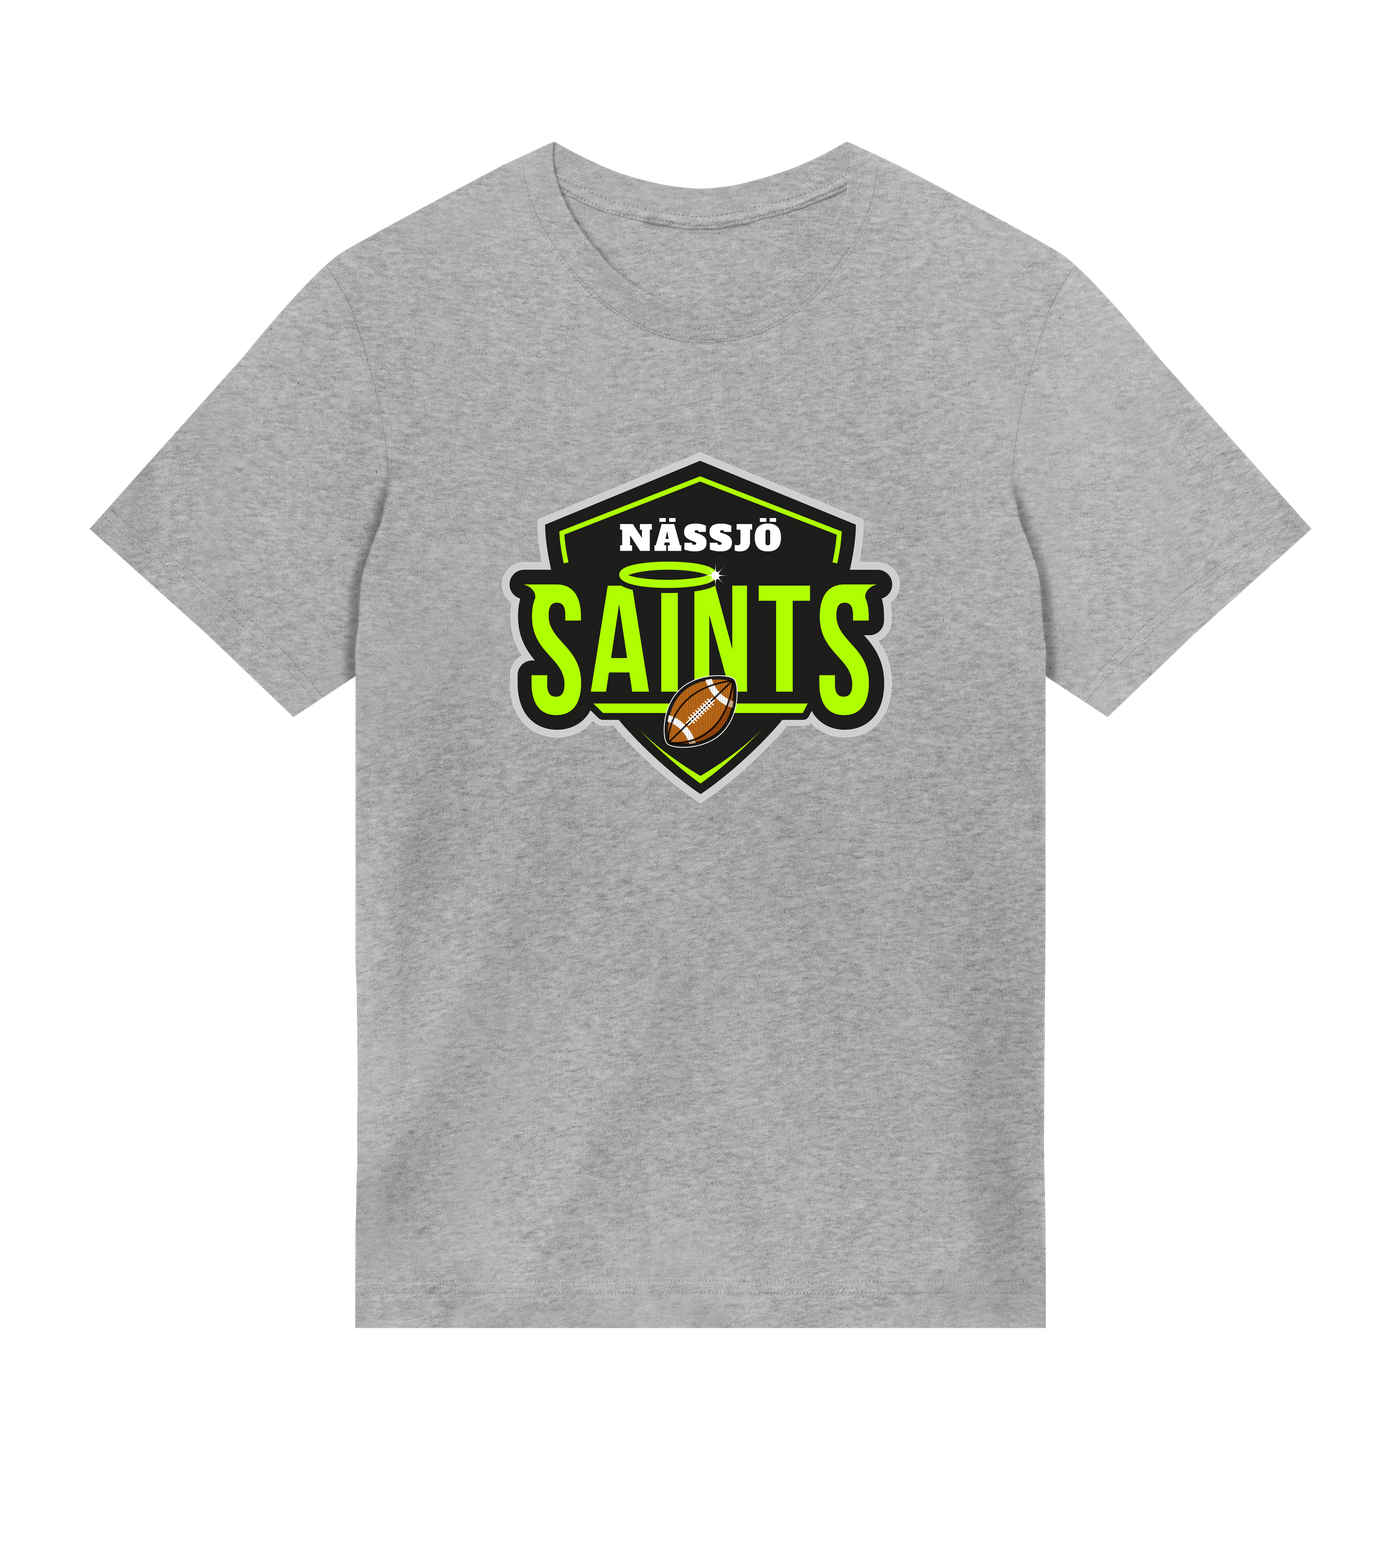 Nässjö Saints Tee - Premium t-shirt from REYRR STUDIO - Shop now at Reyrr Athletics